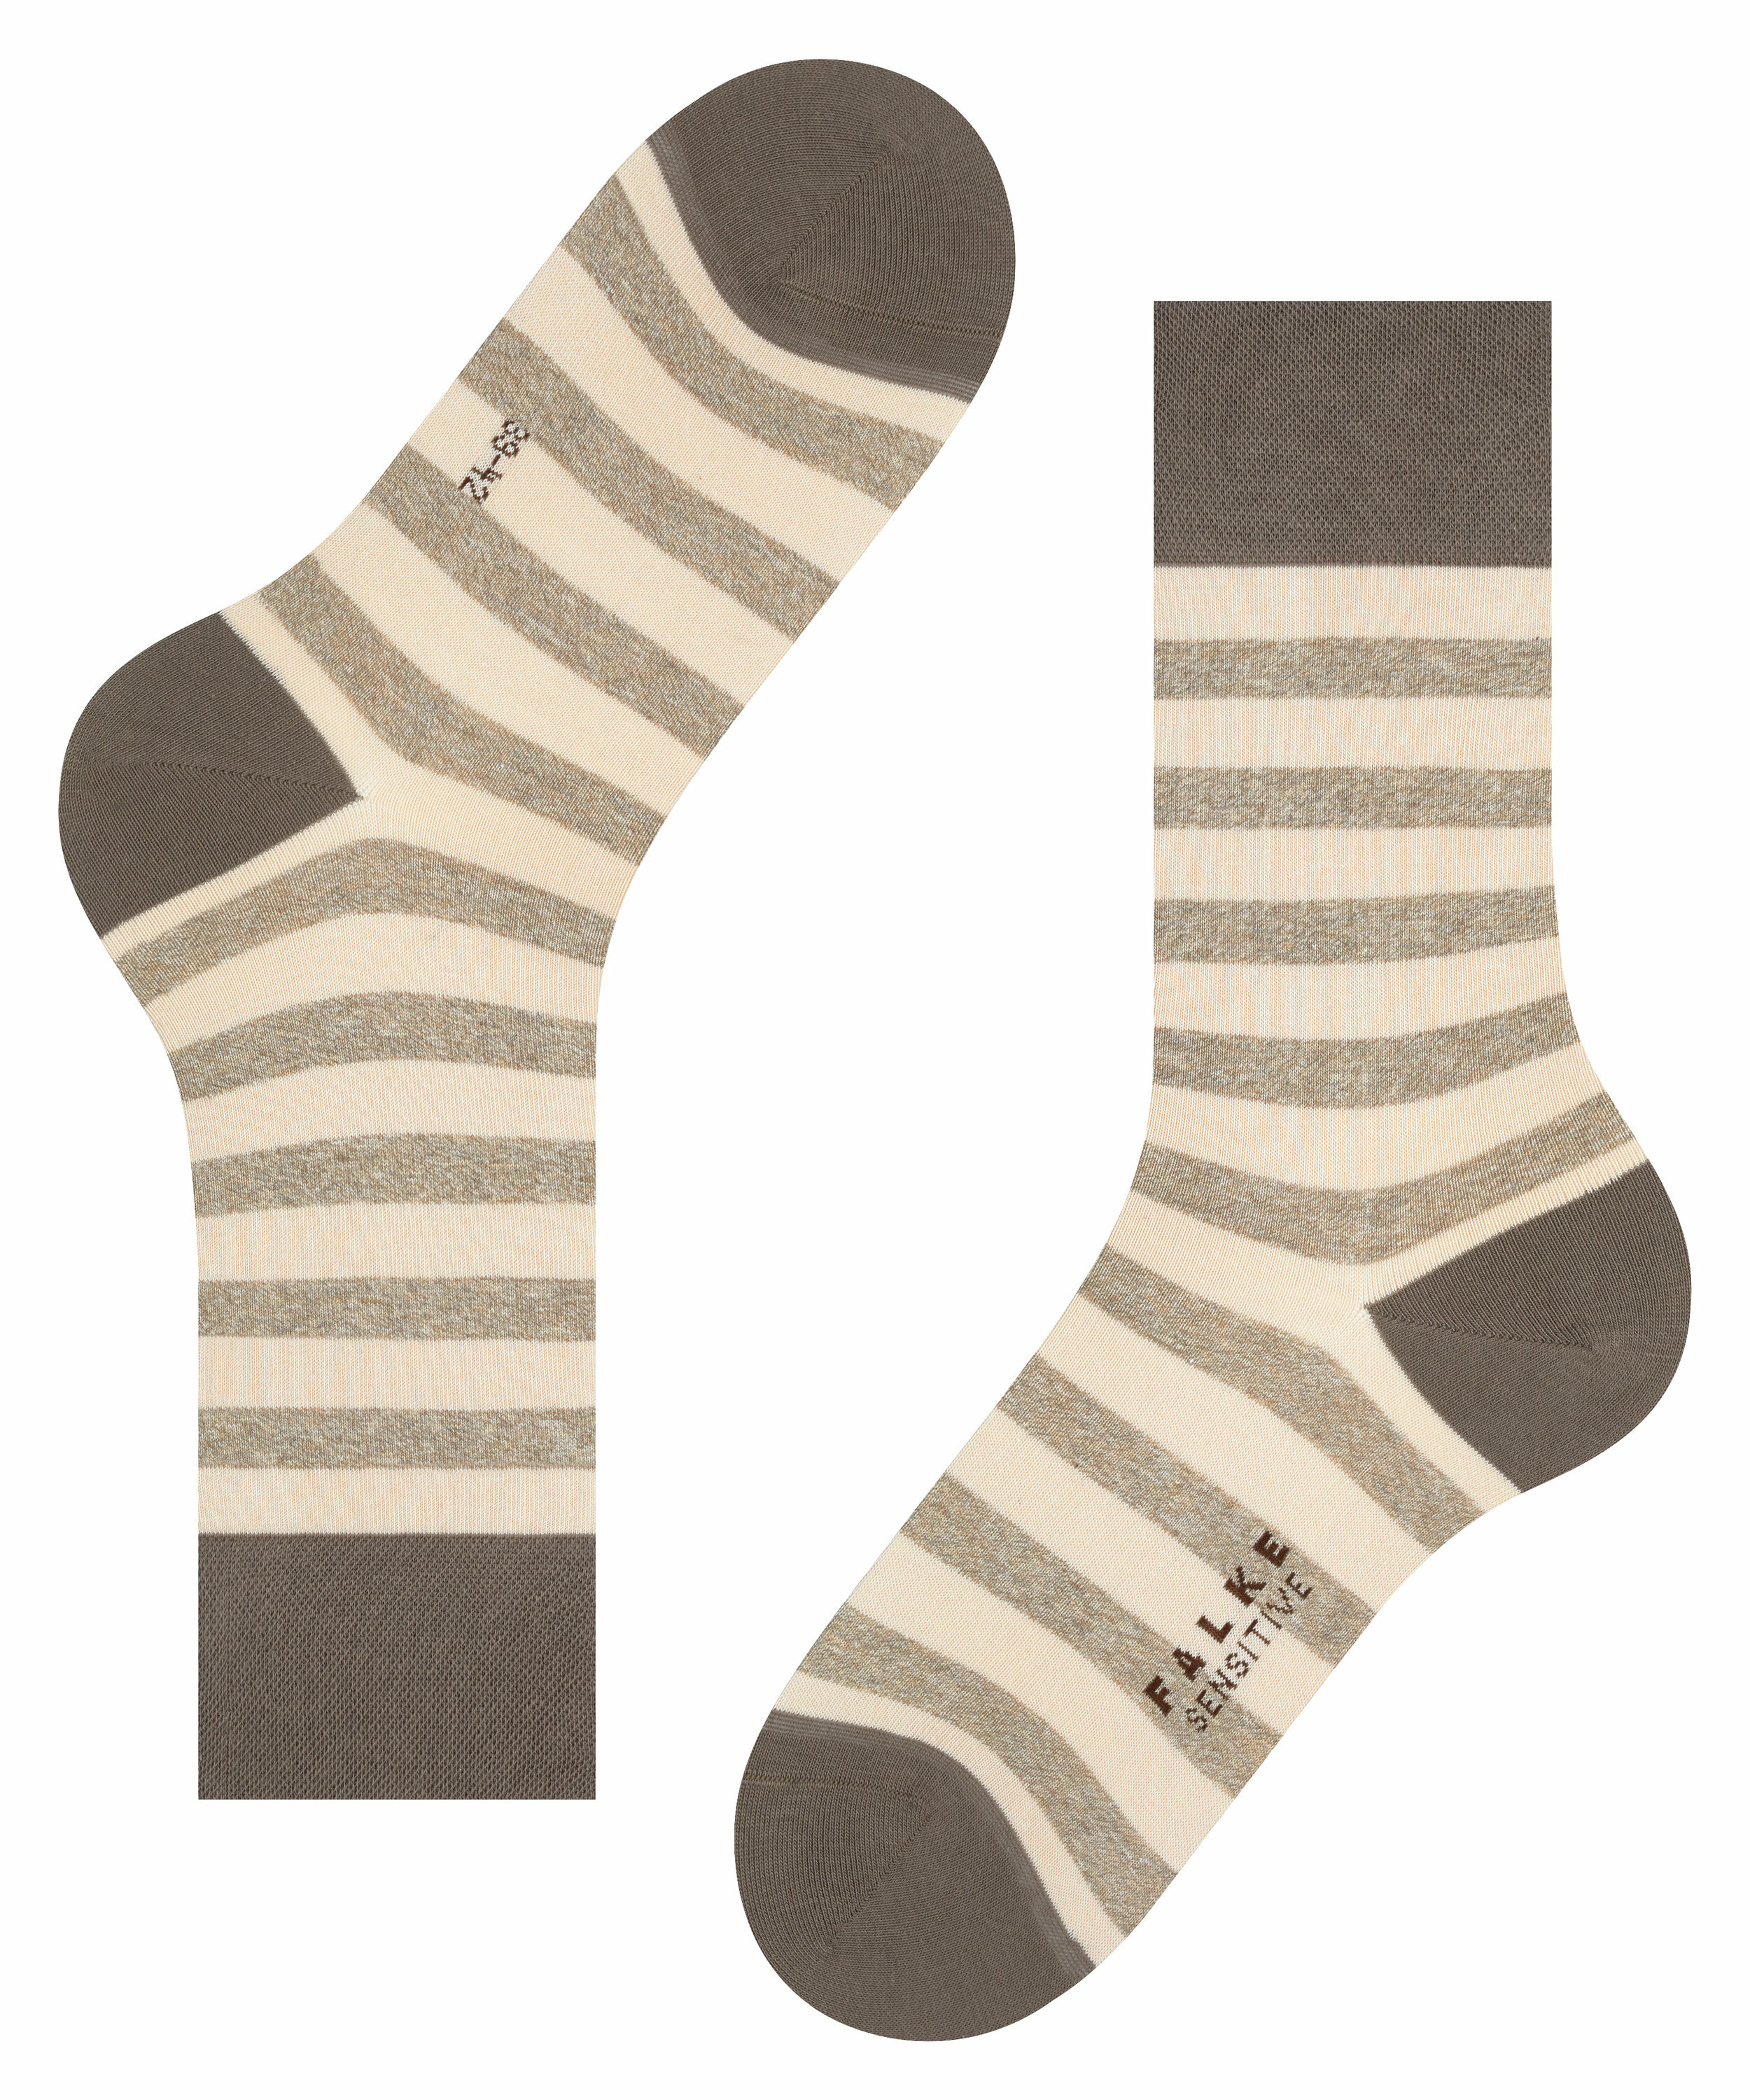 Baumwoll-Socke "Sensitive Mapped Line" ohne Gummi-Druck